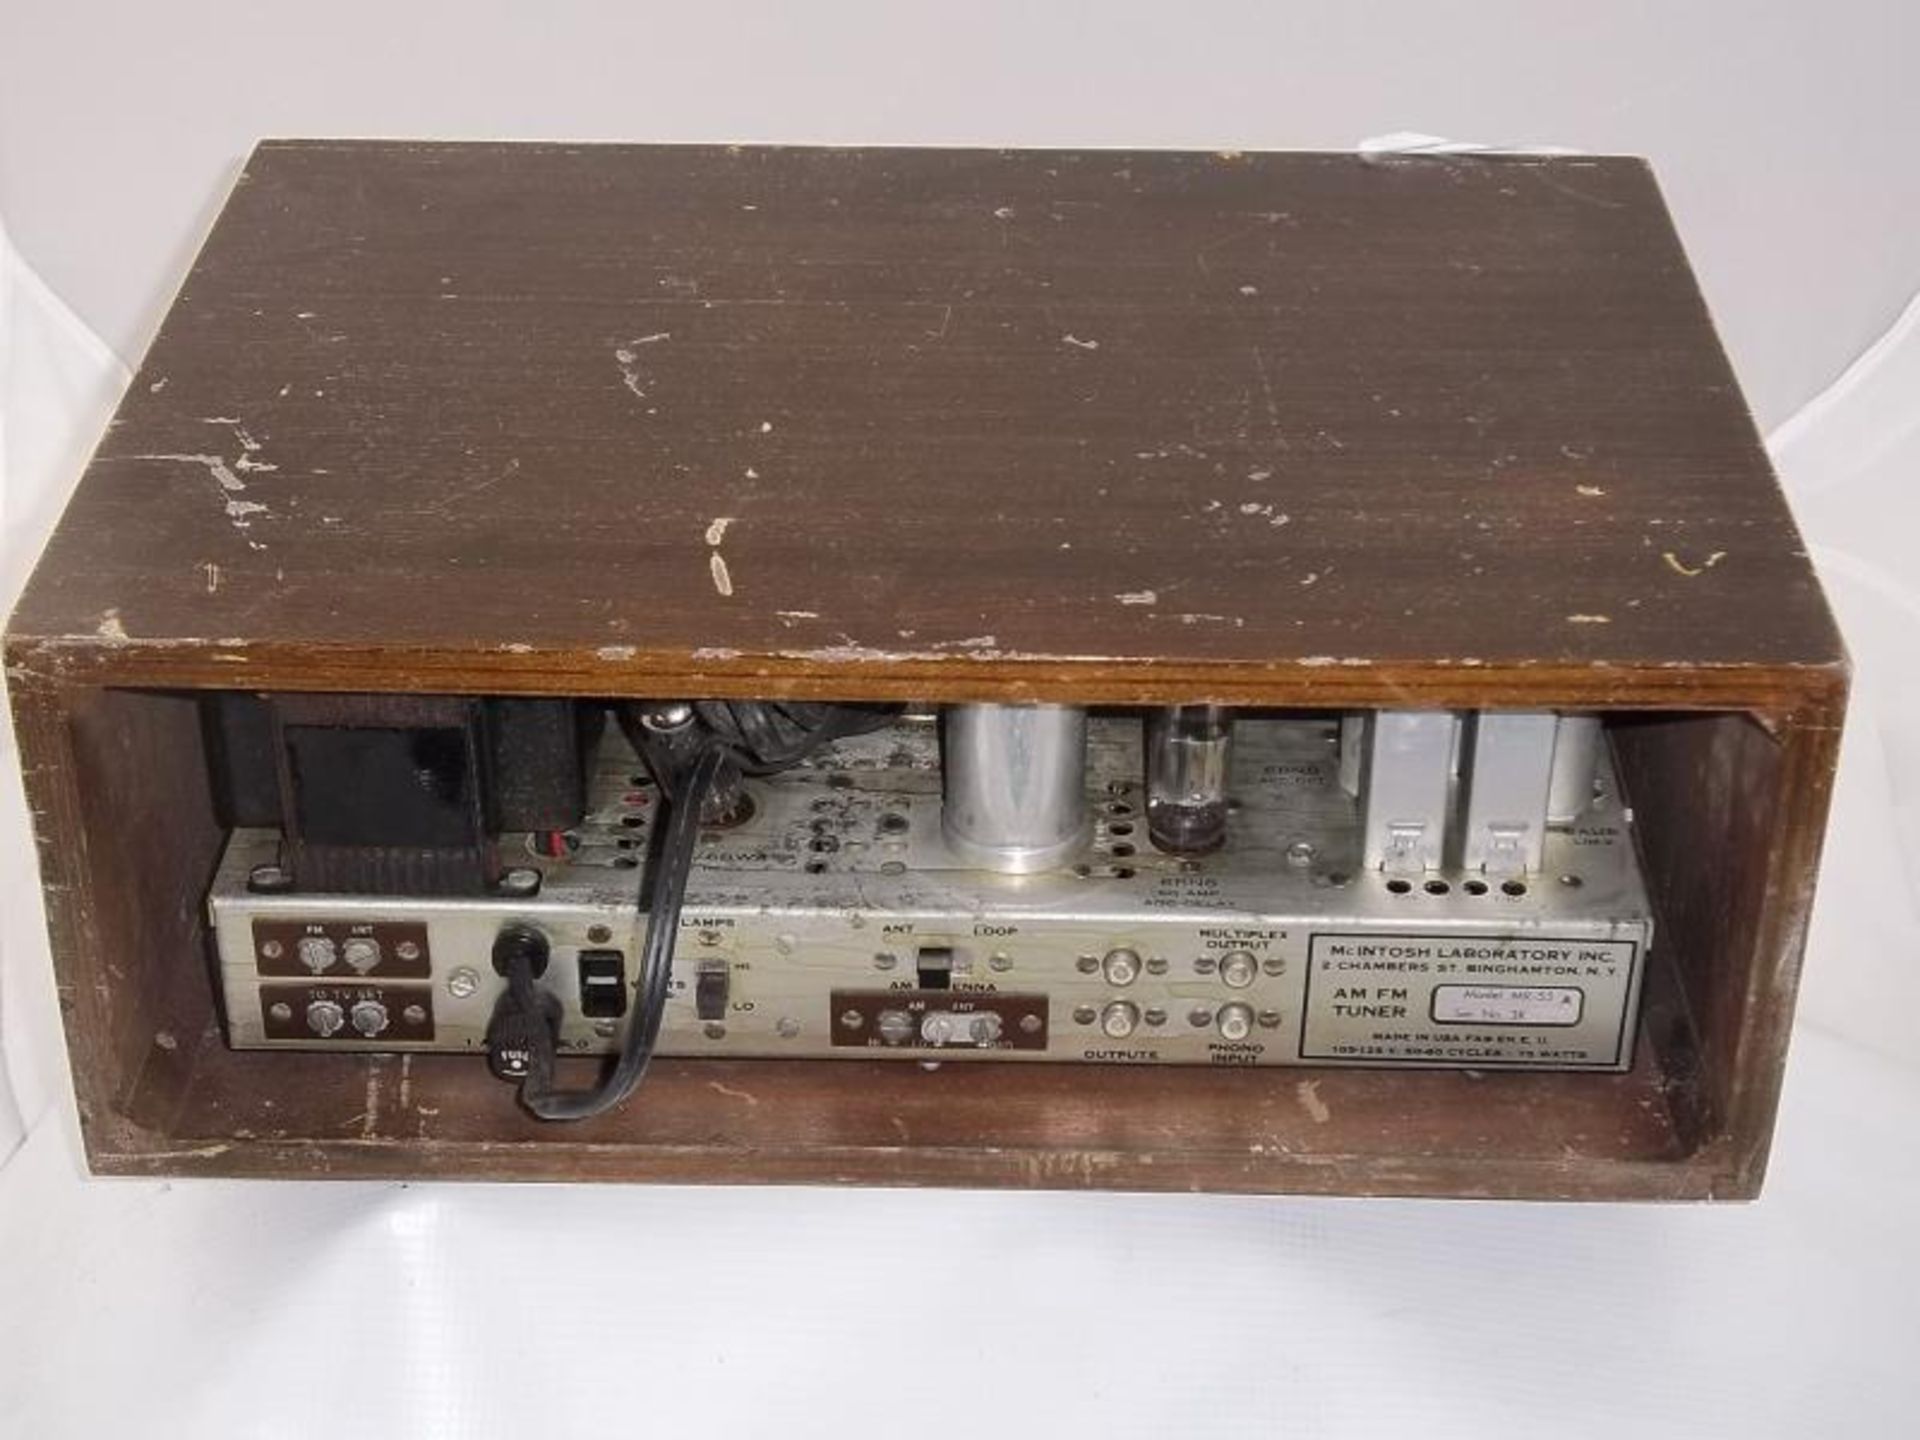 McIntosh MR 55 AM FM Tuner, w/ case,worn and scratched, s # 3K957, plug cut off - Image 2 of 2